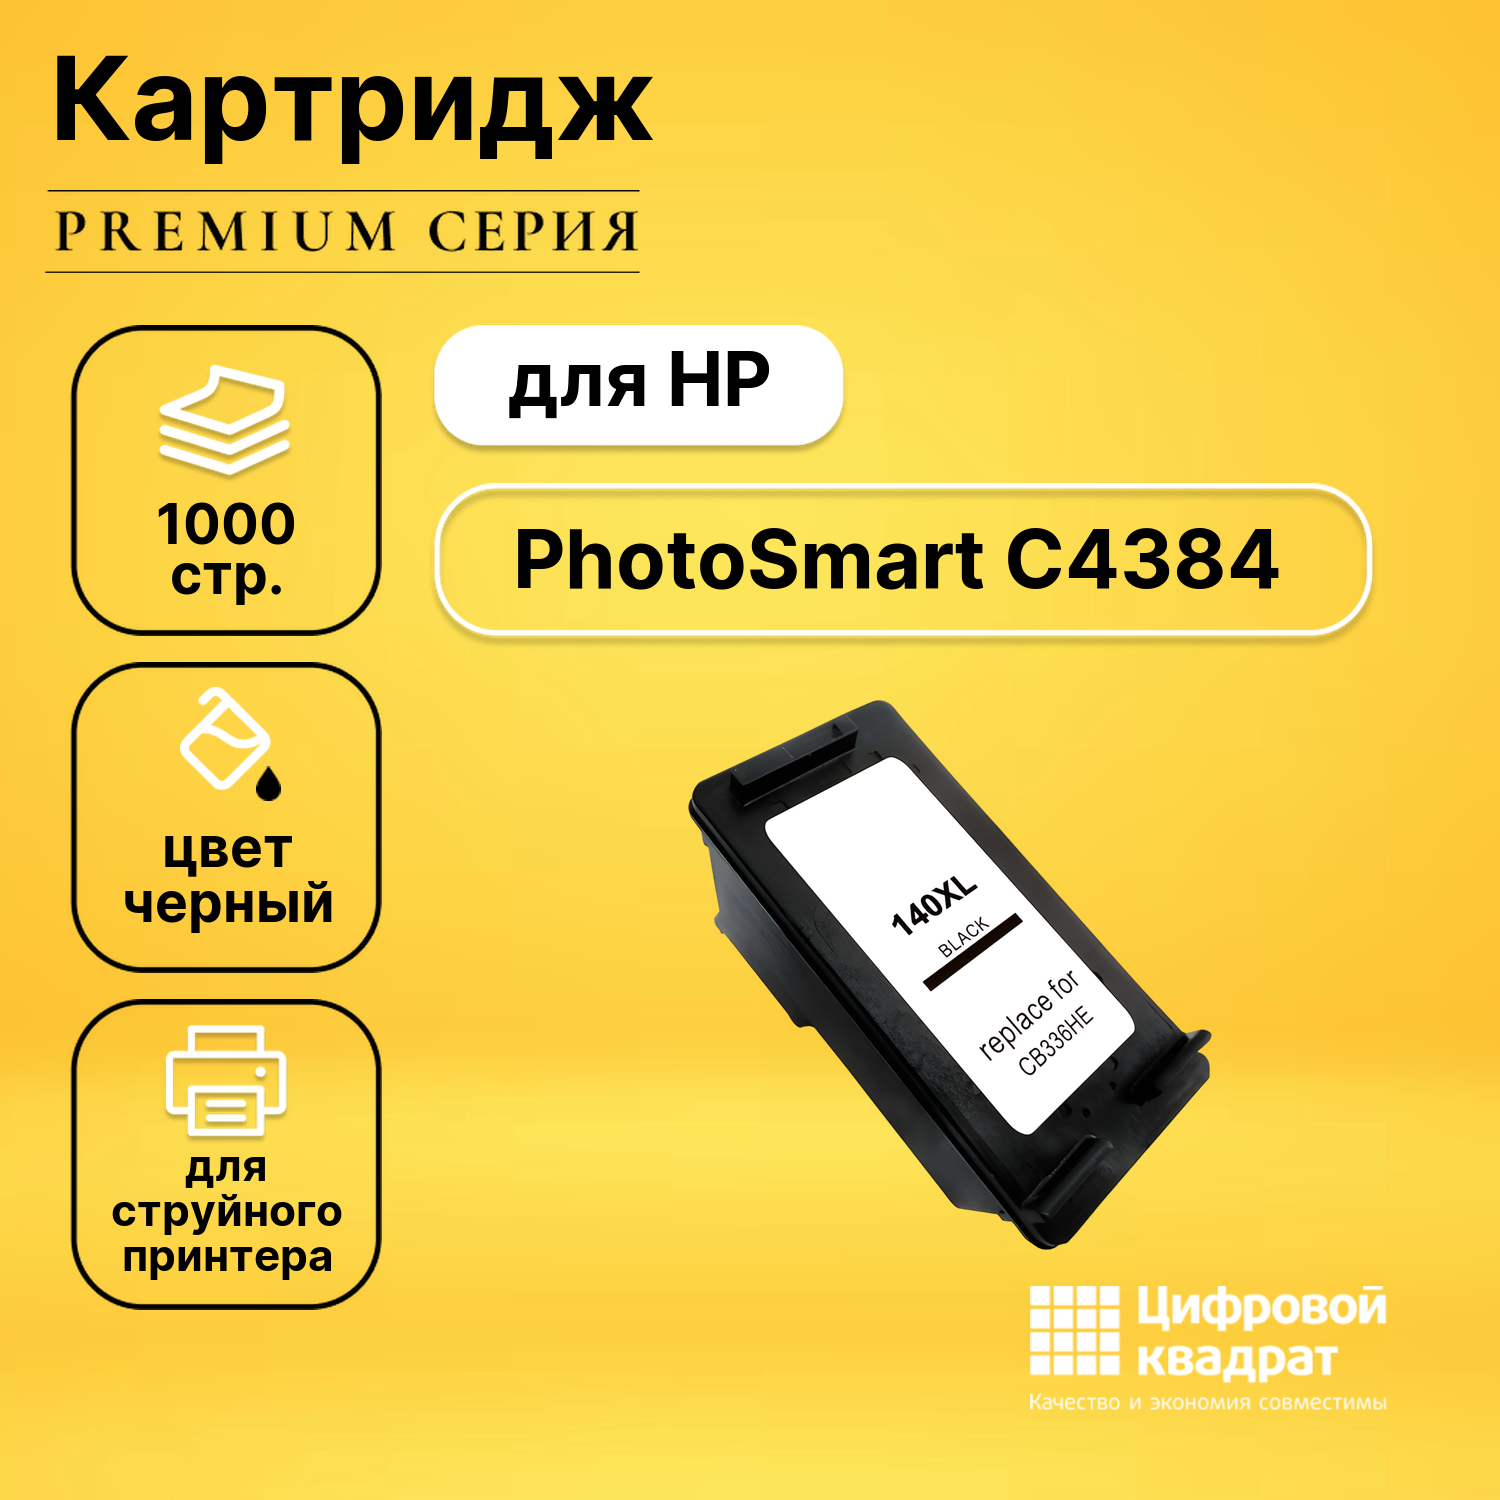 Картридж DS для HP PhotoSmart C4384 совместимый